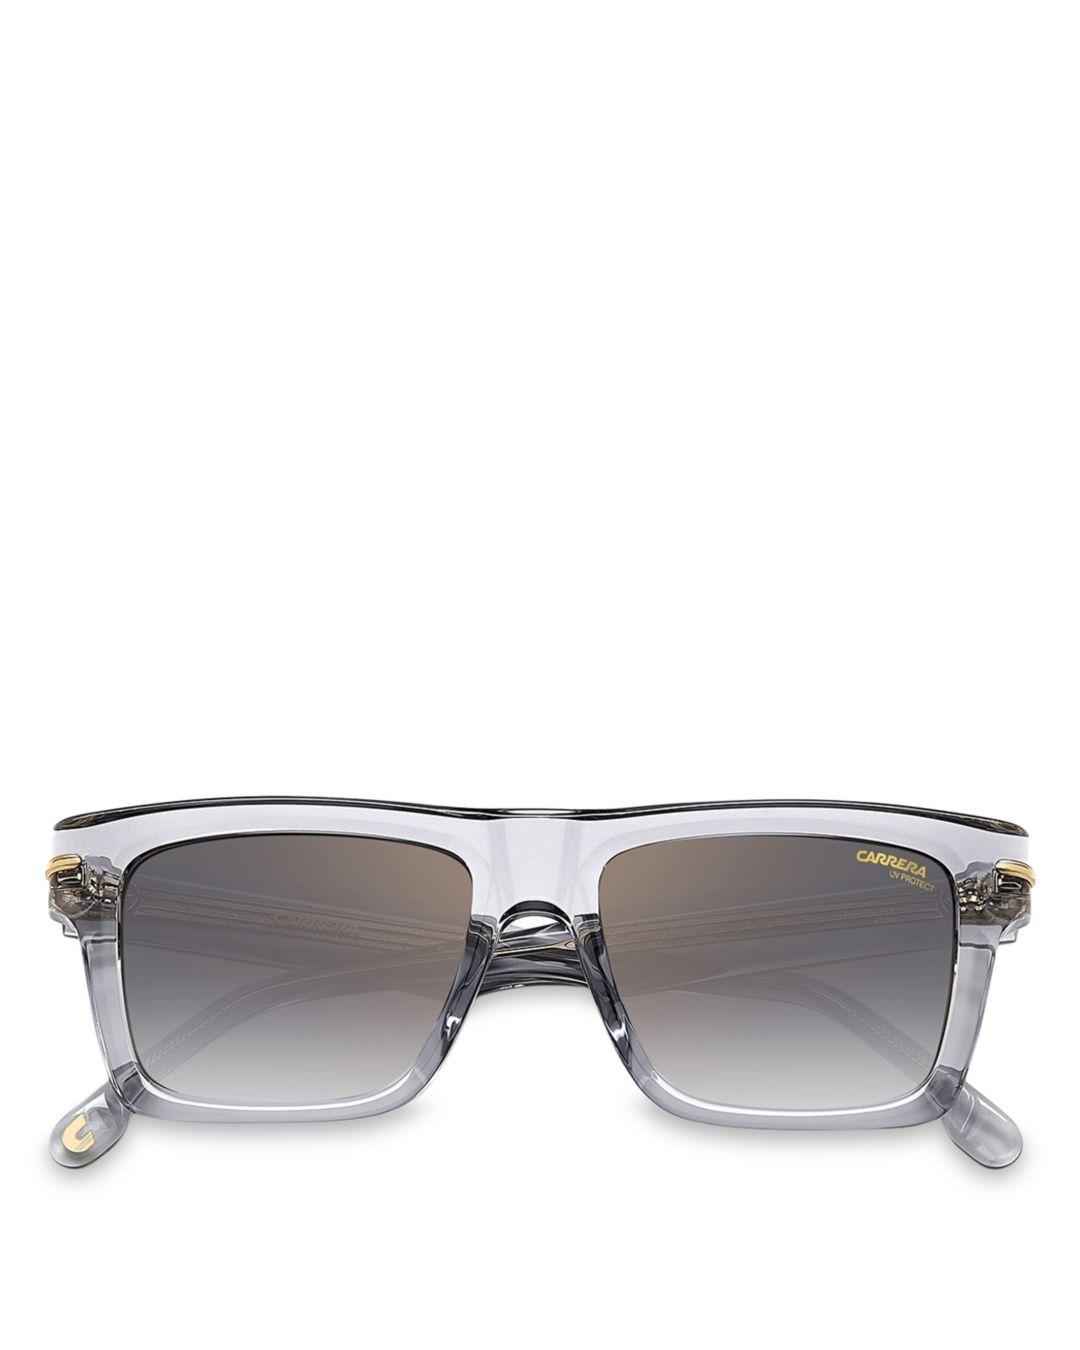 Carrera Flat Top Sunglasses in Metallic | Lyst